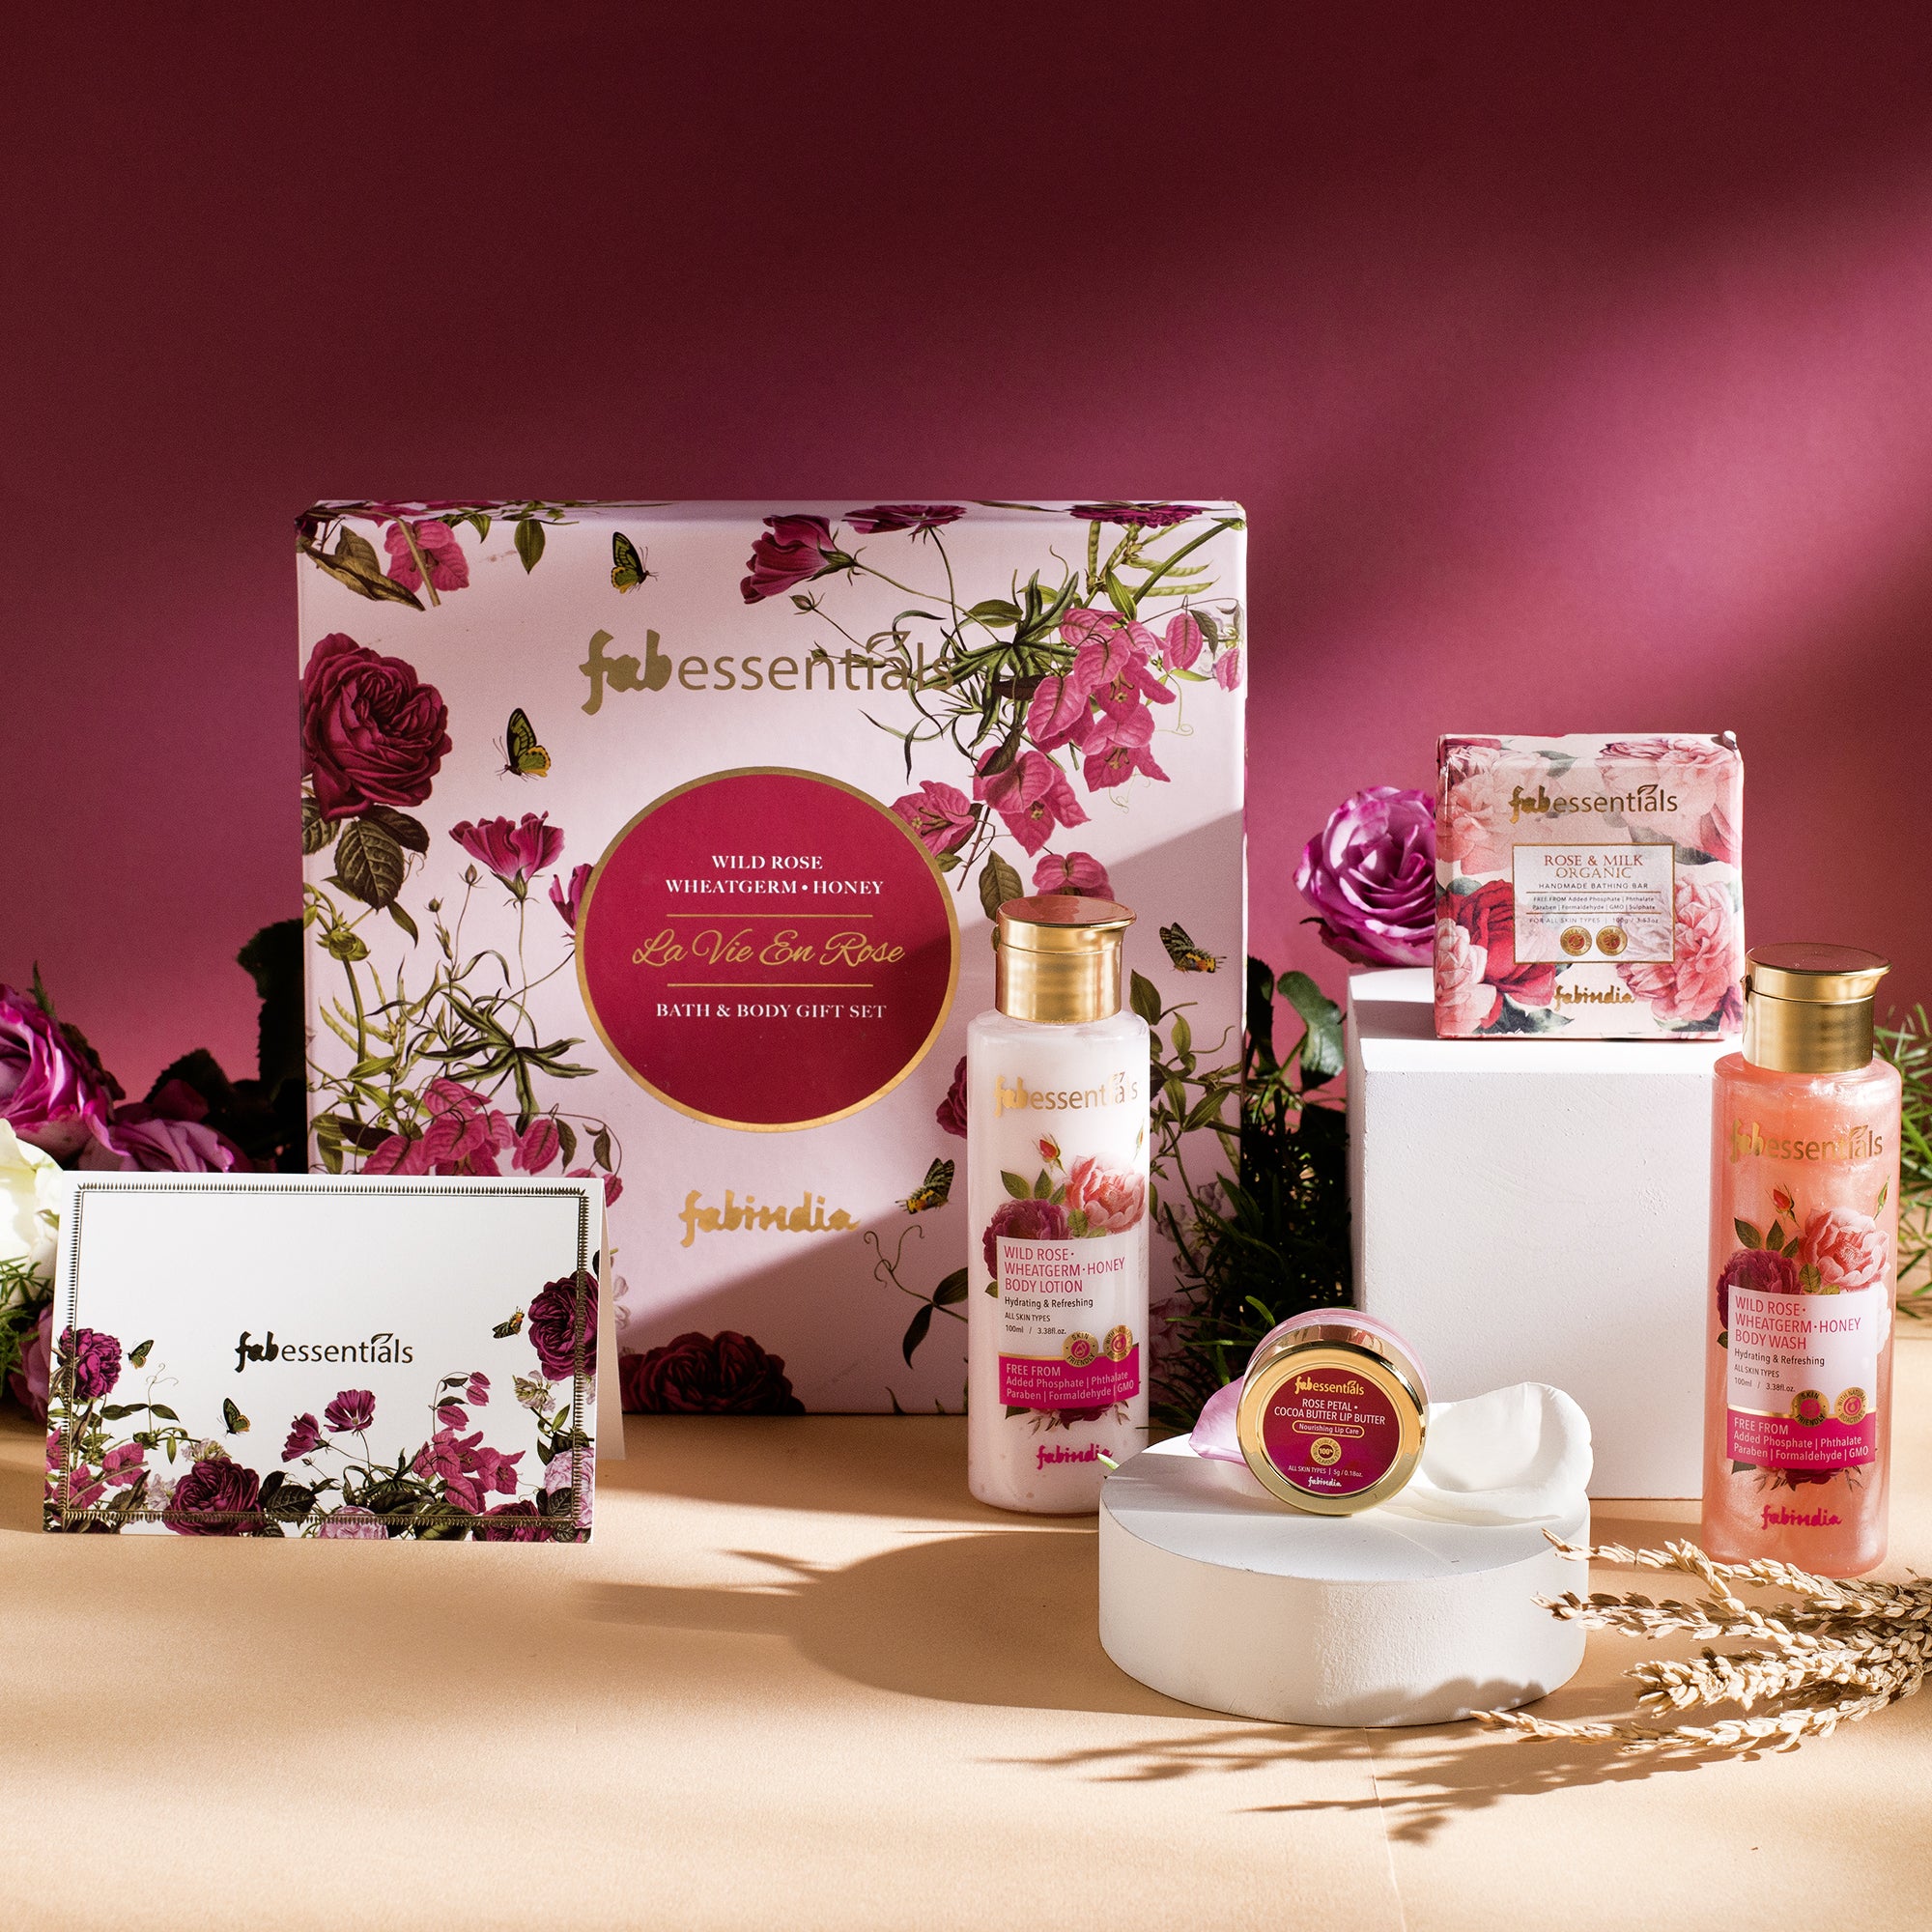 Wild Rose Wheatgerm Honey Bath & Body Gift Set - 200 ml + 105 gm